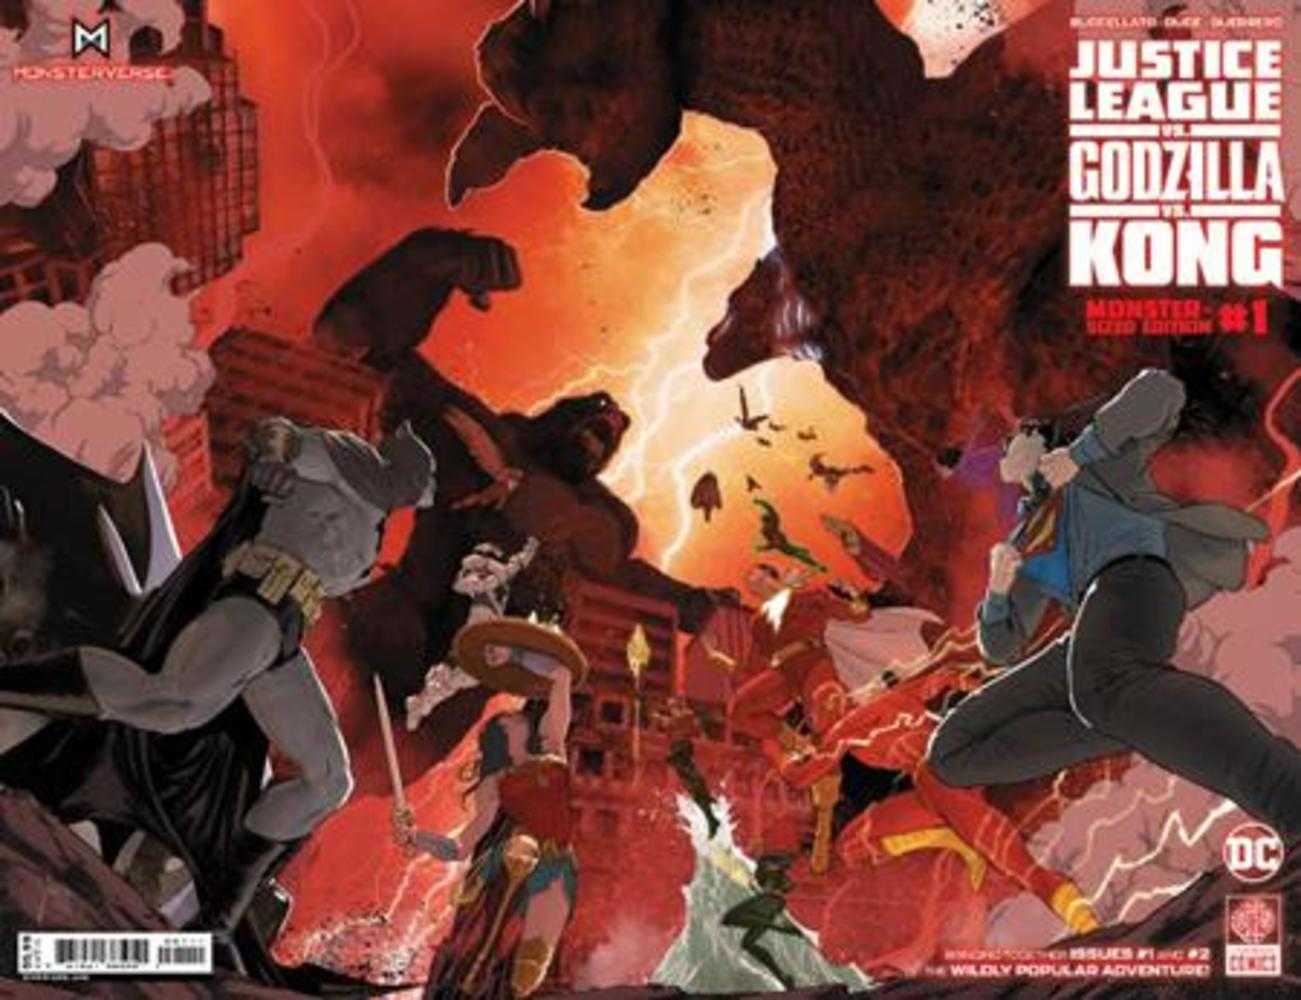 Justice League vs Godzilla vs Kong Monster-Sized Edition